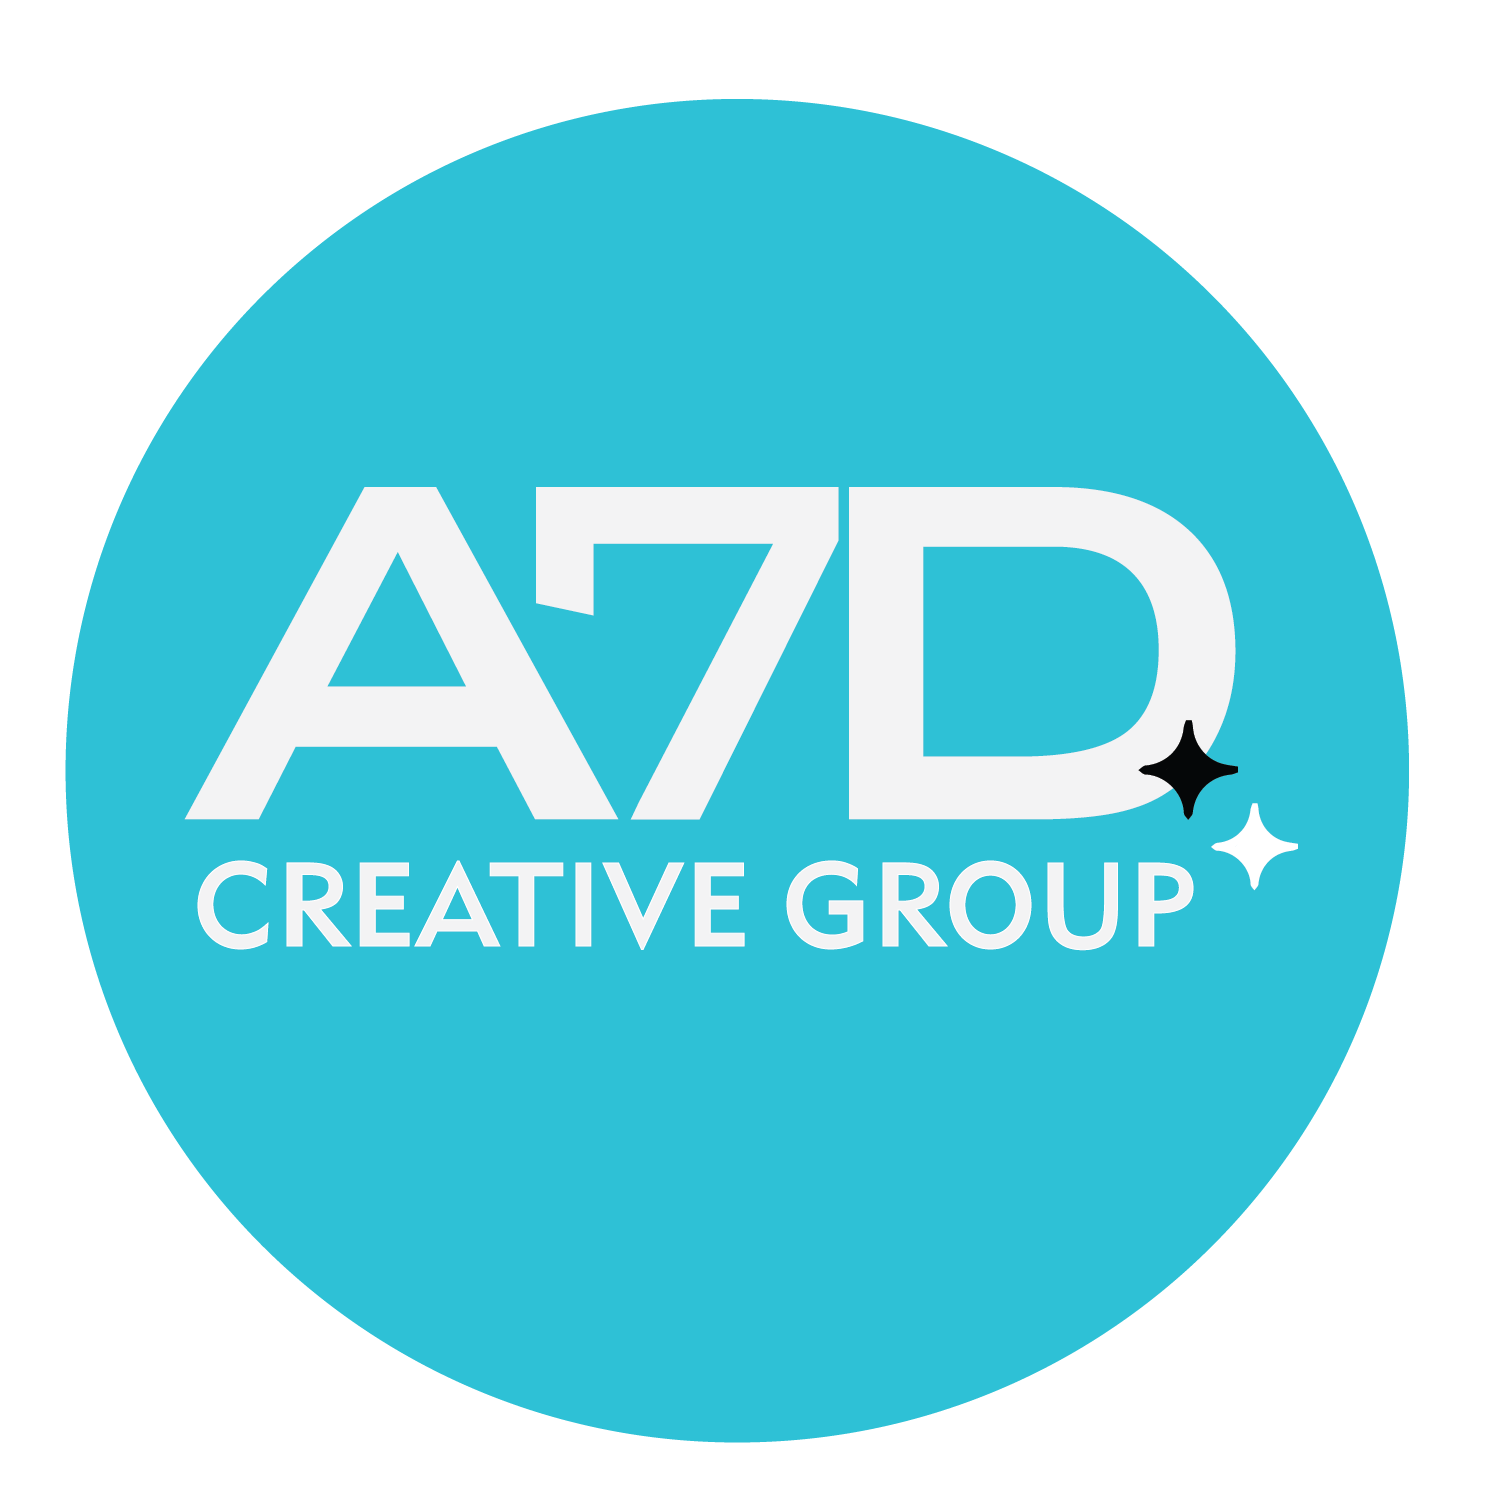 A7D Creative Group